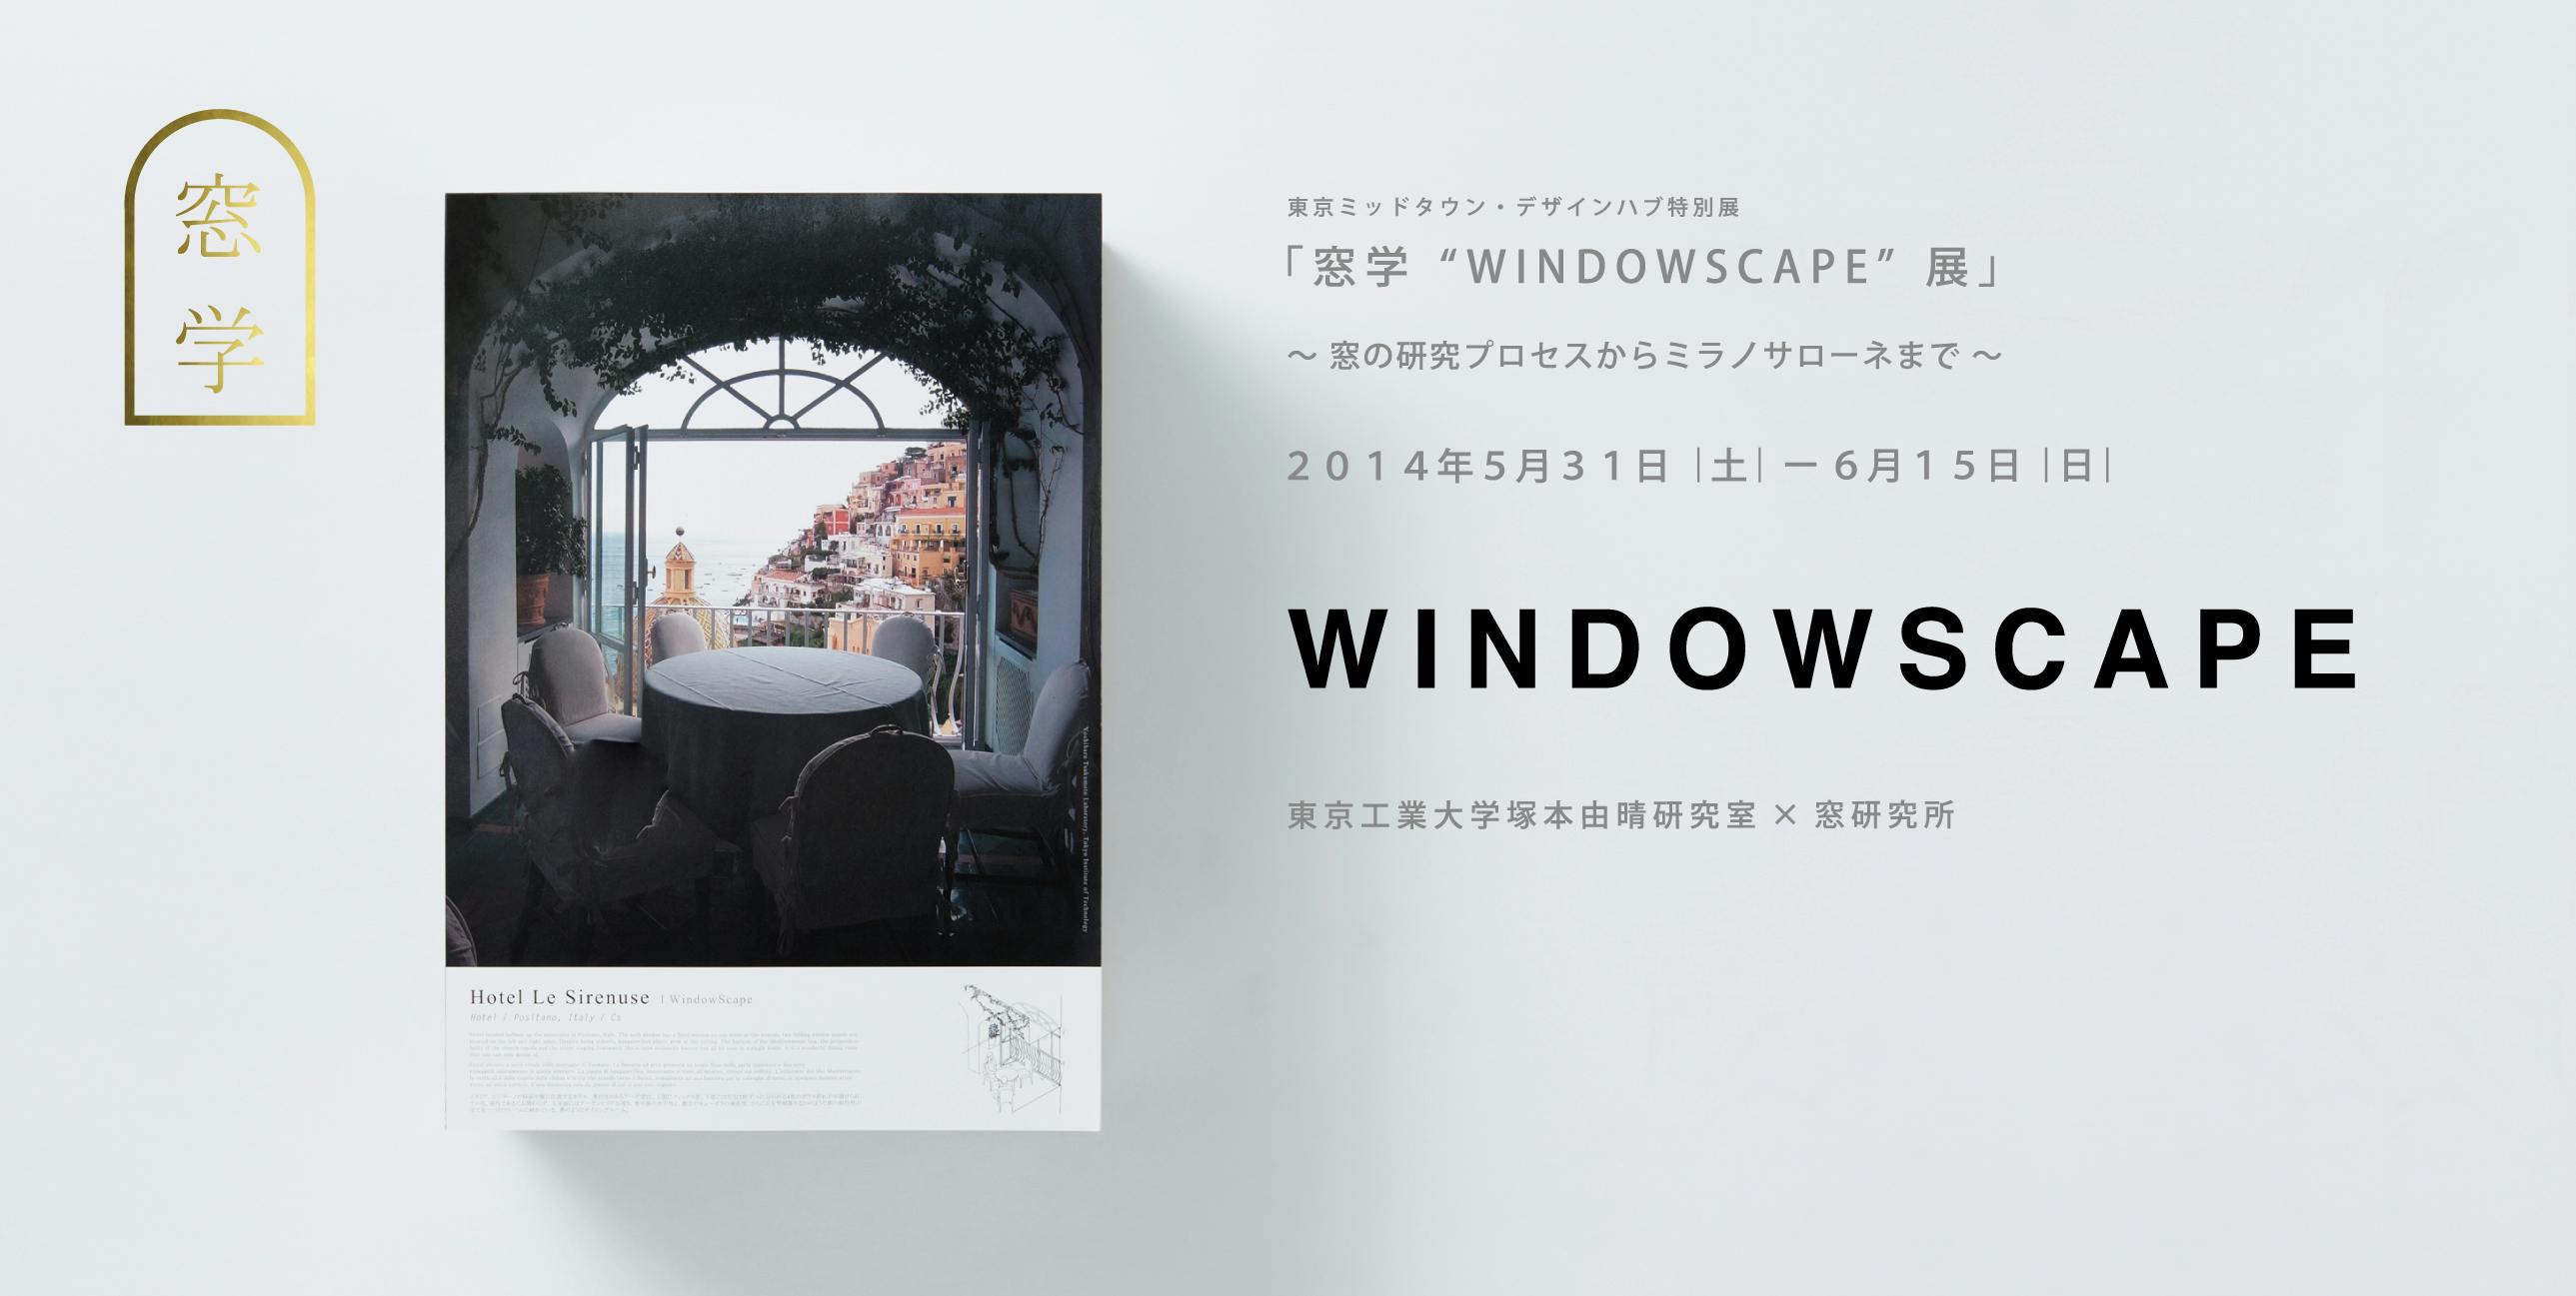 Windowology Exhibition "WINDOWSCAPE"